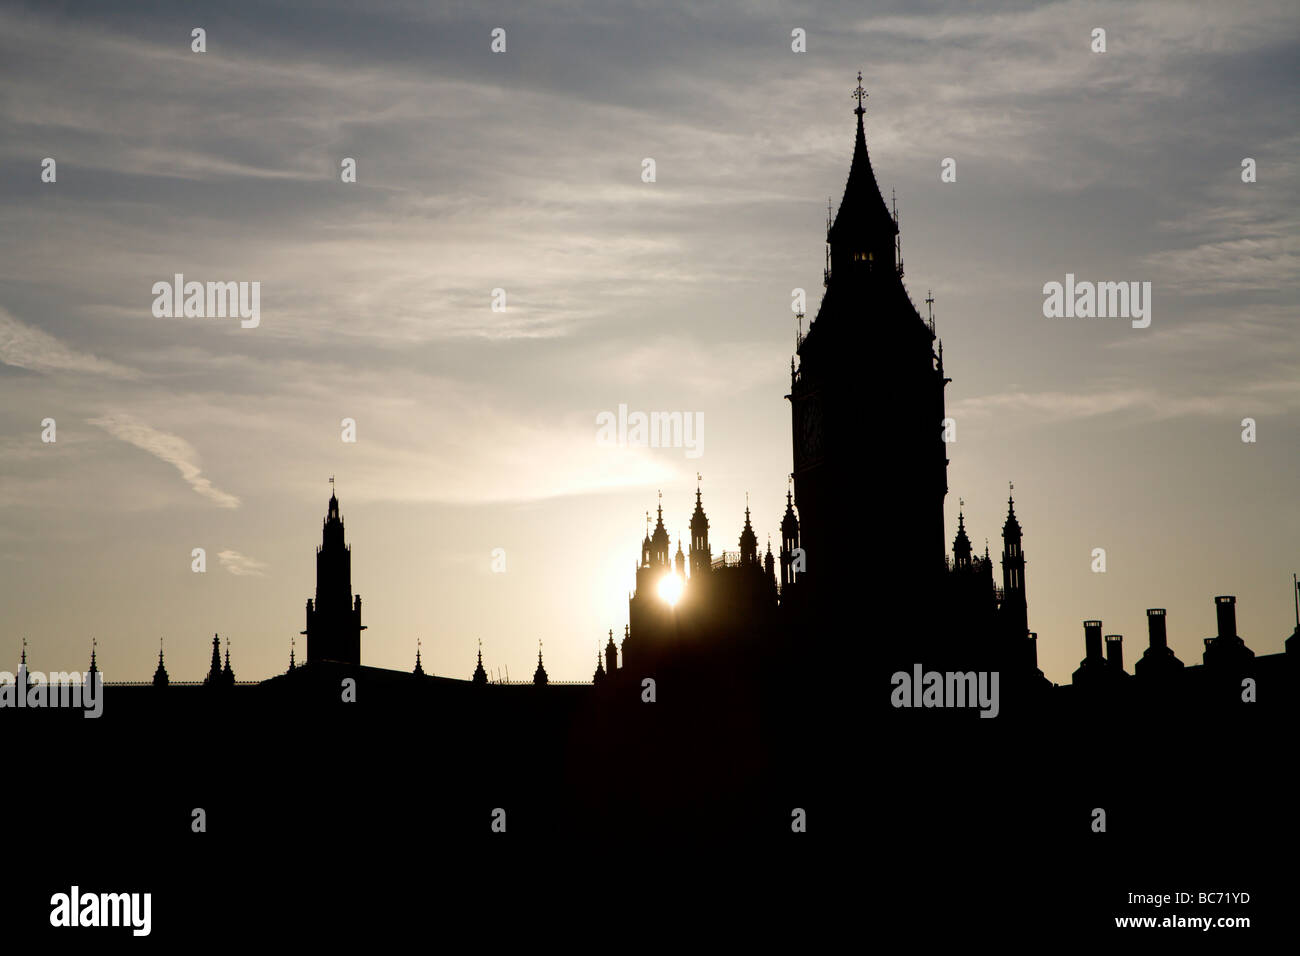 London - sunset over Big Ben - silhouette Stock Photo